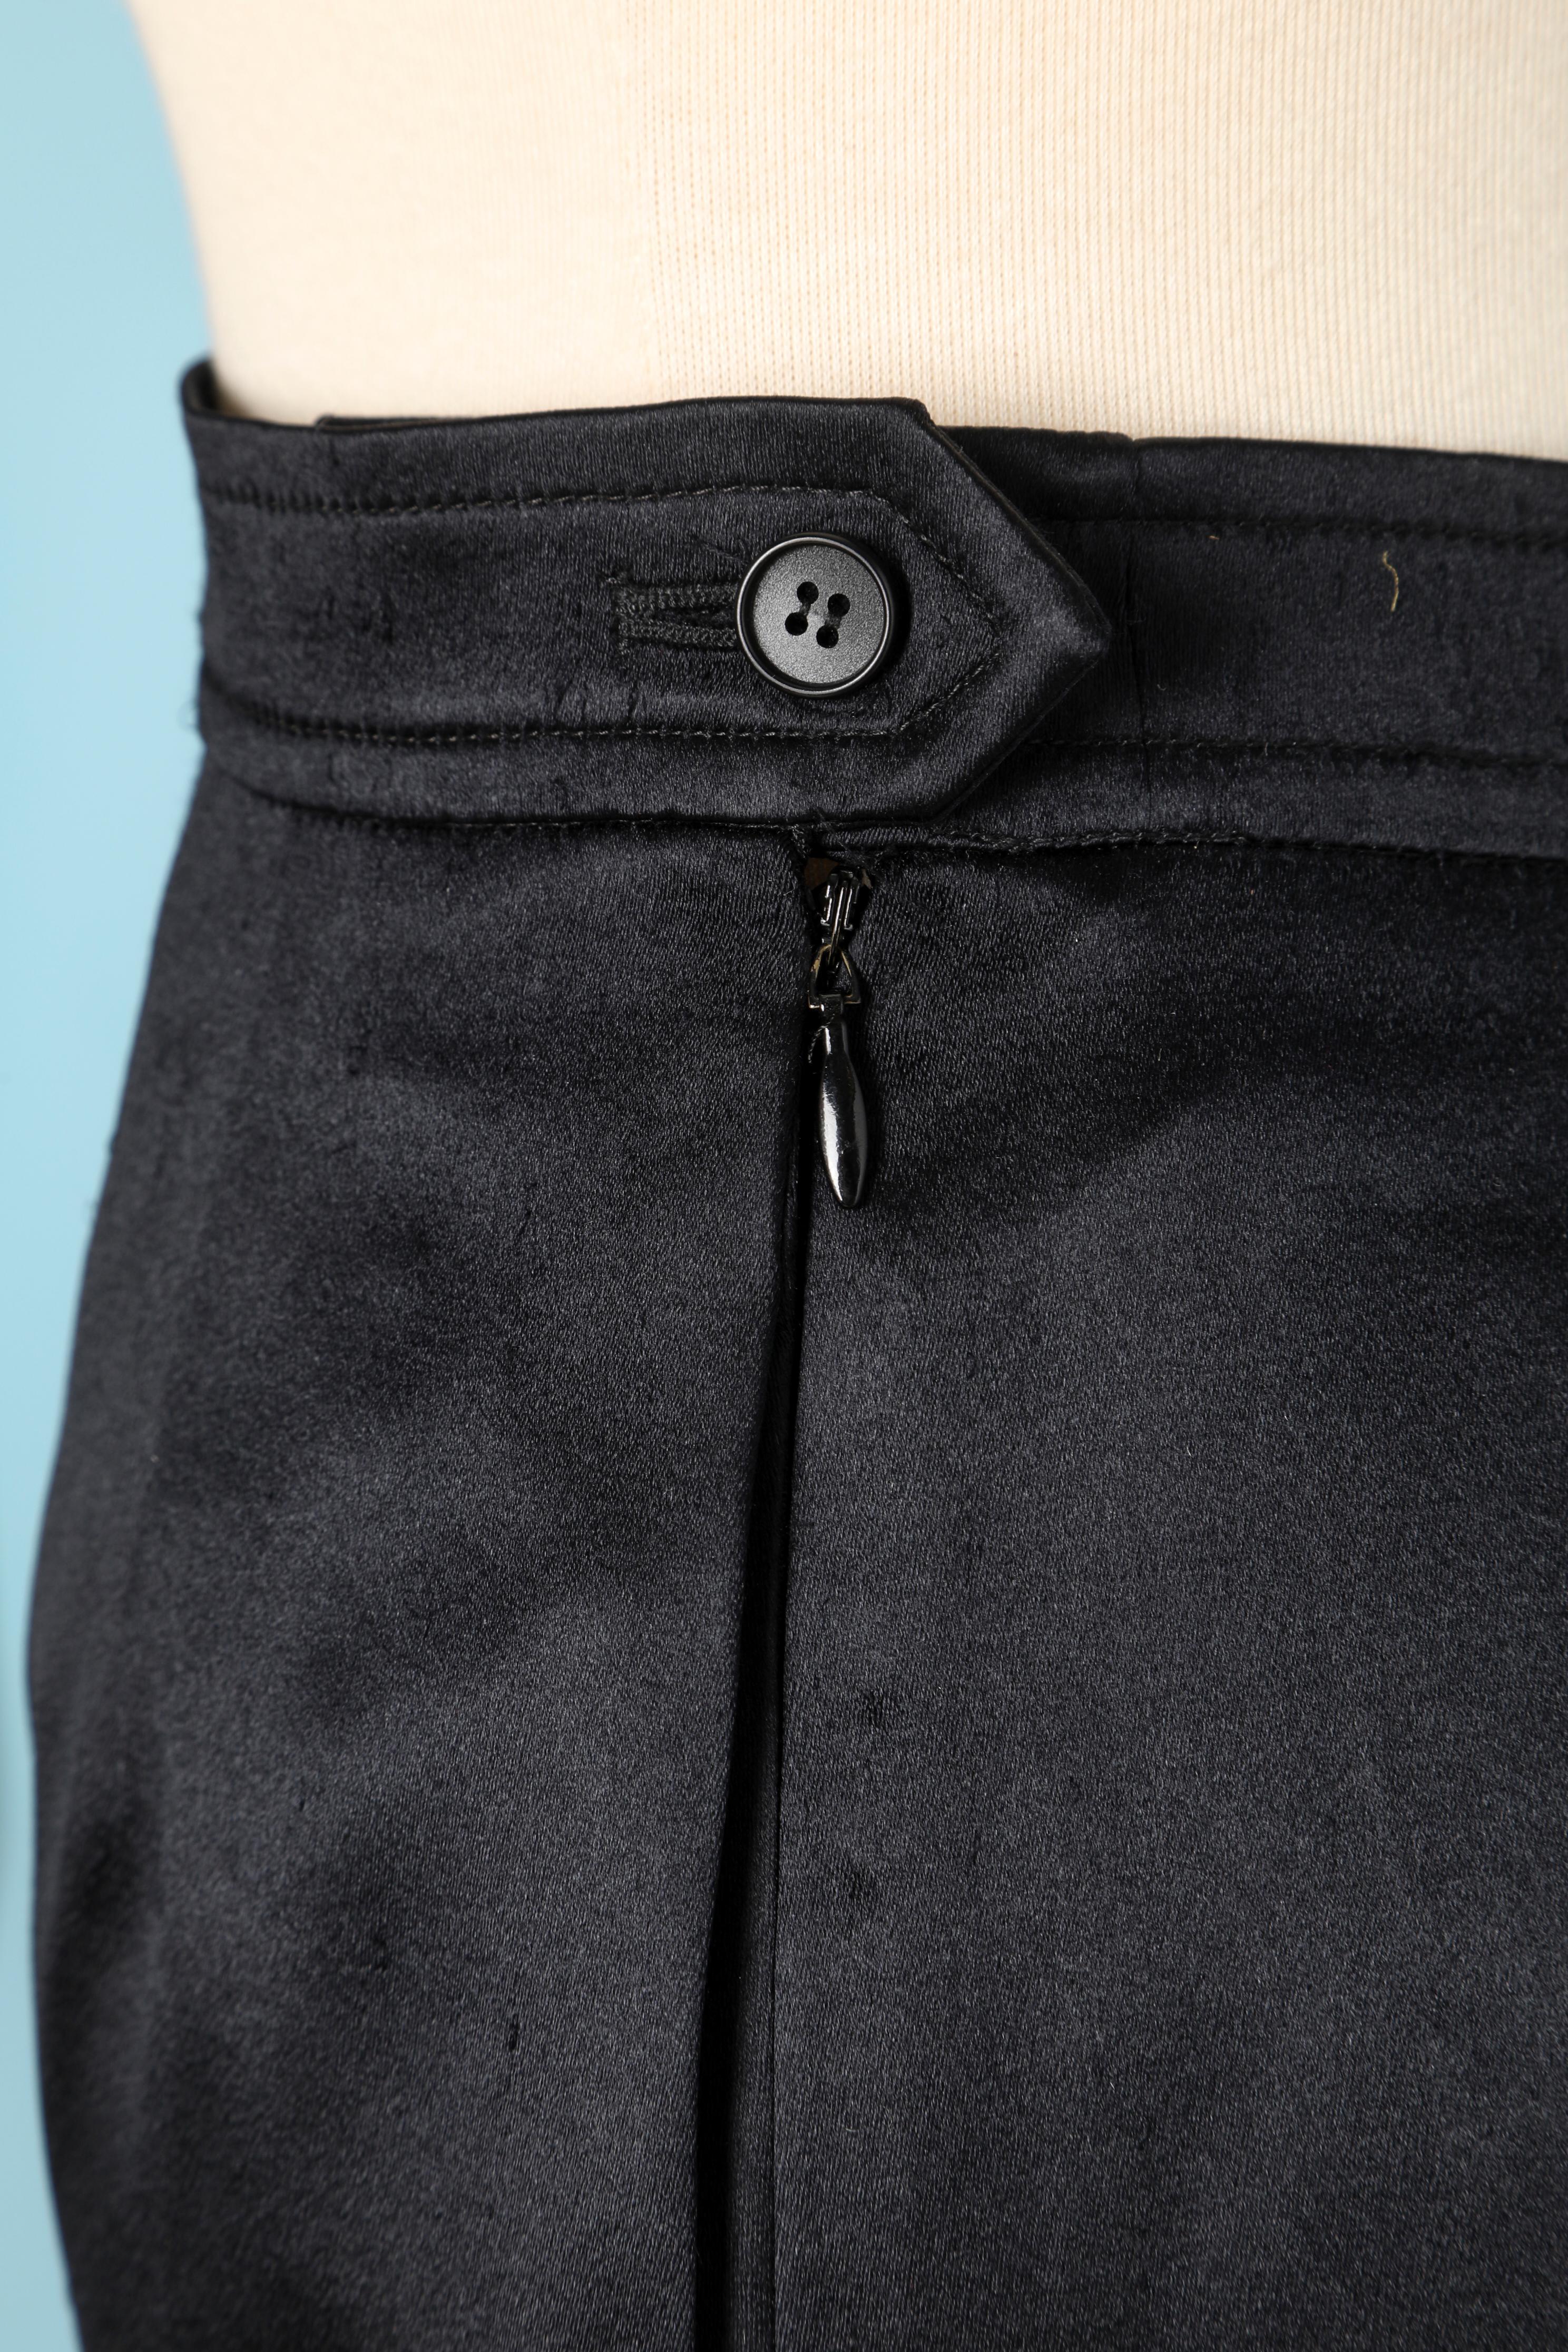 Black satin pencil skirt with pockets